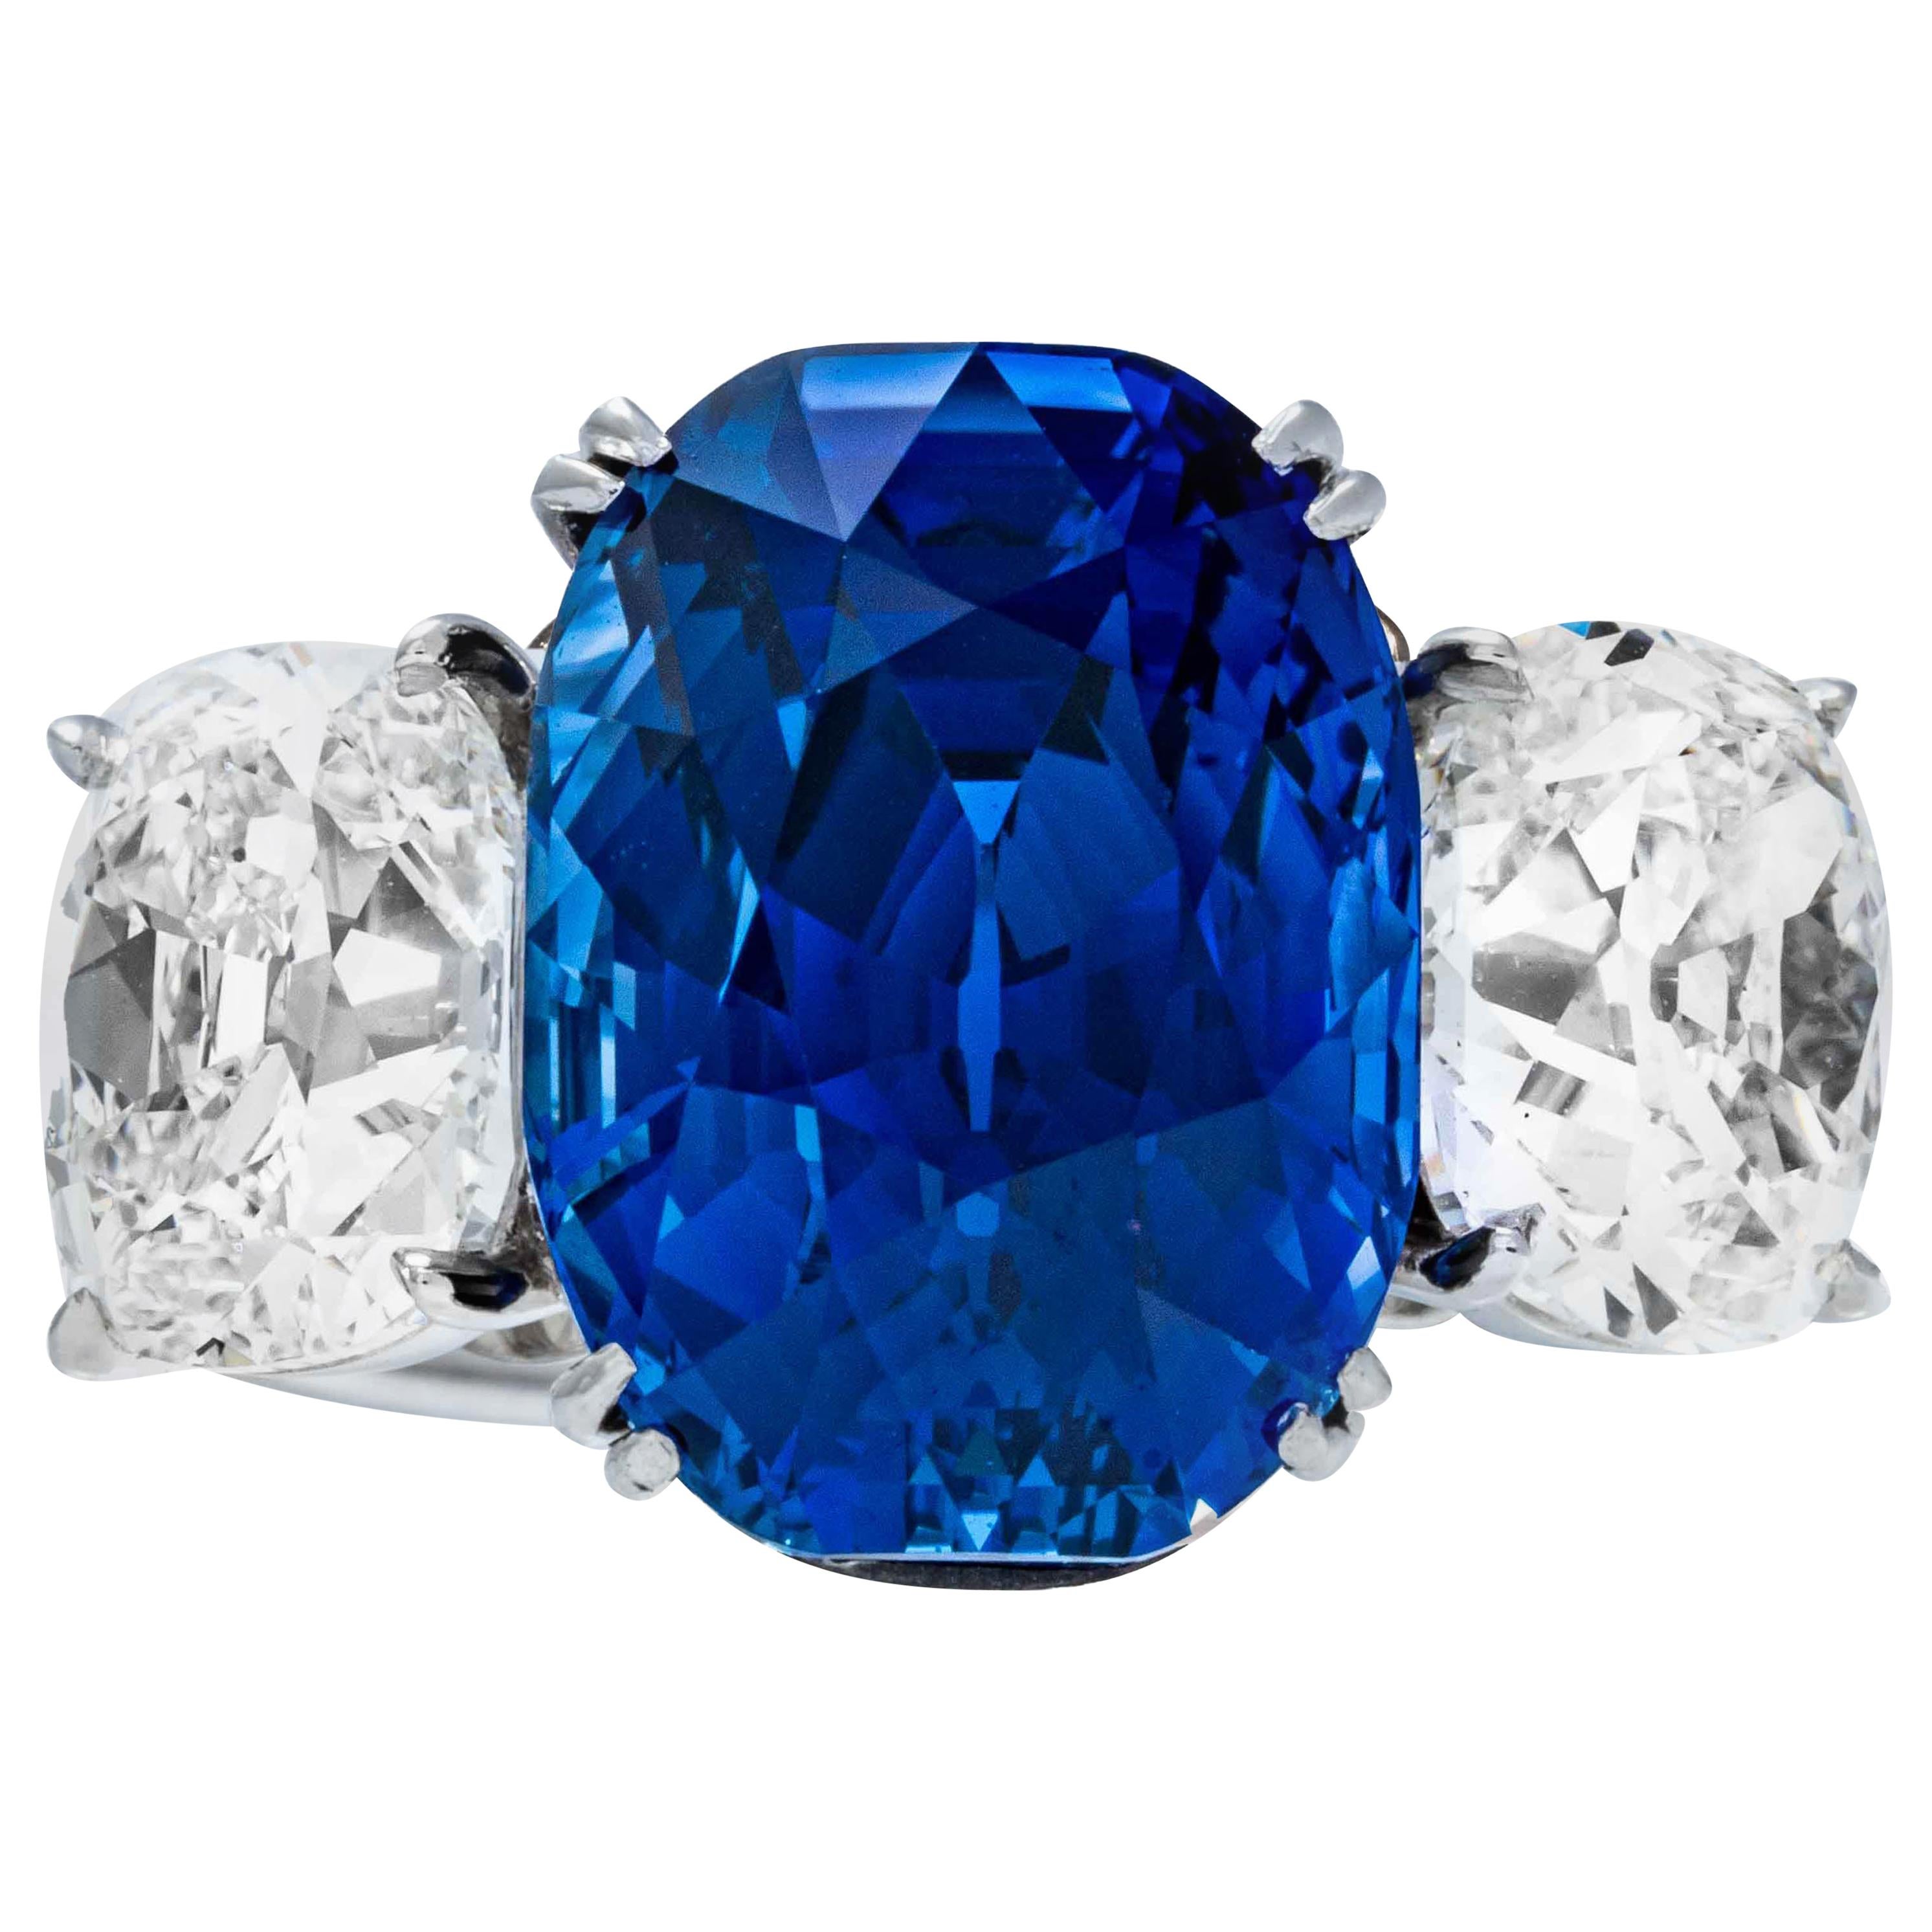 Shreve, Crump & Low 10.88 Carat "Jewel of Kashmir" Sapphire and Diamond Ring